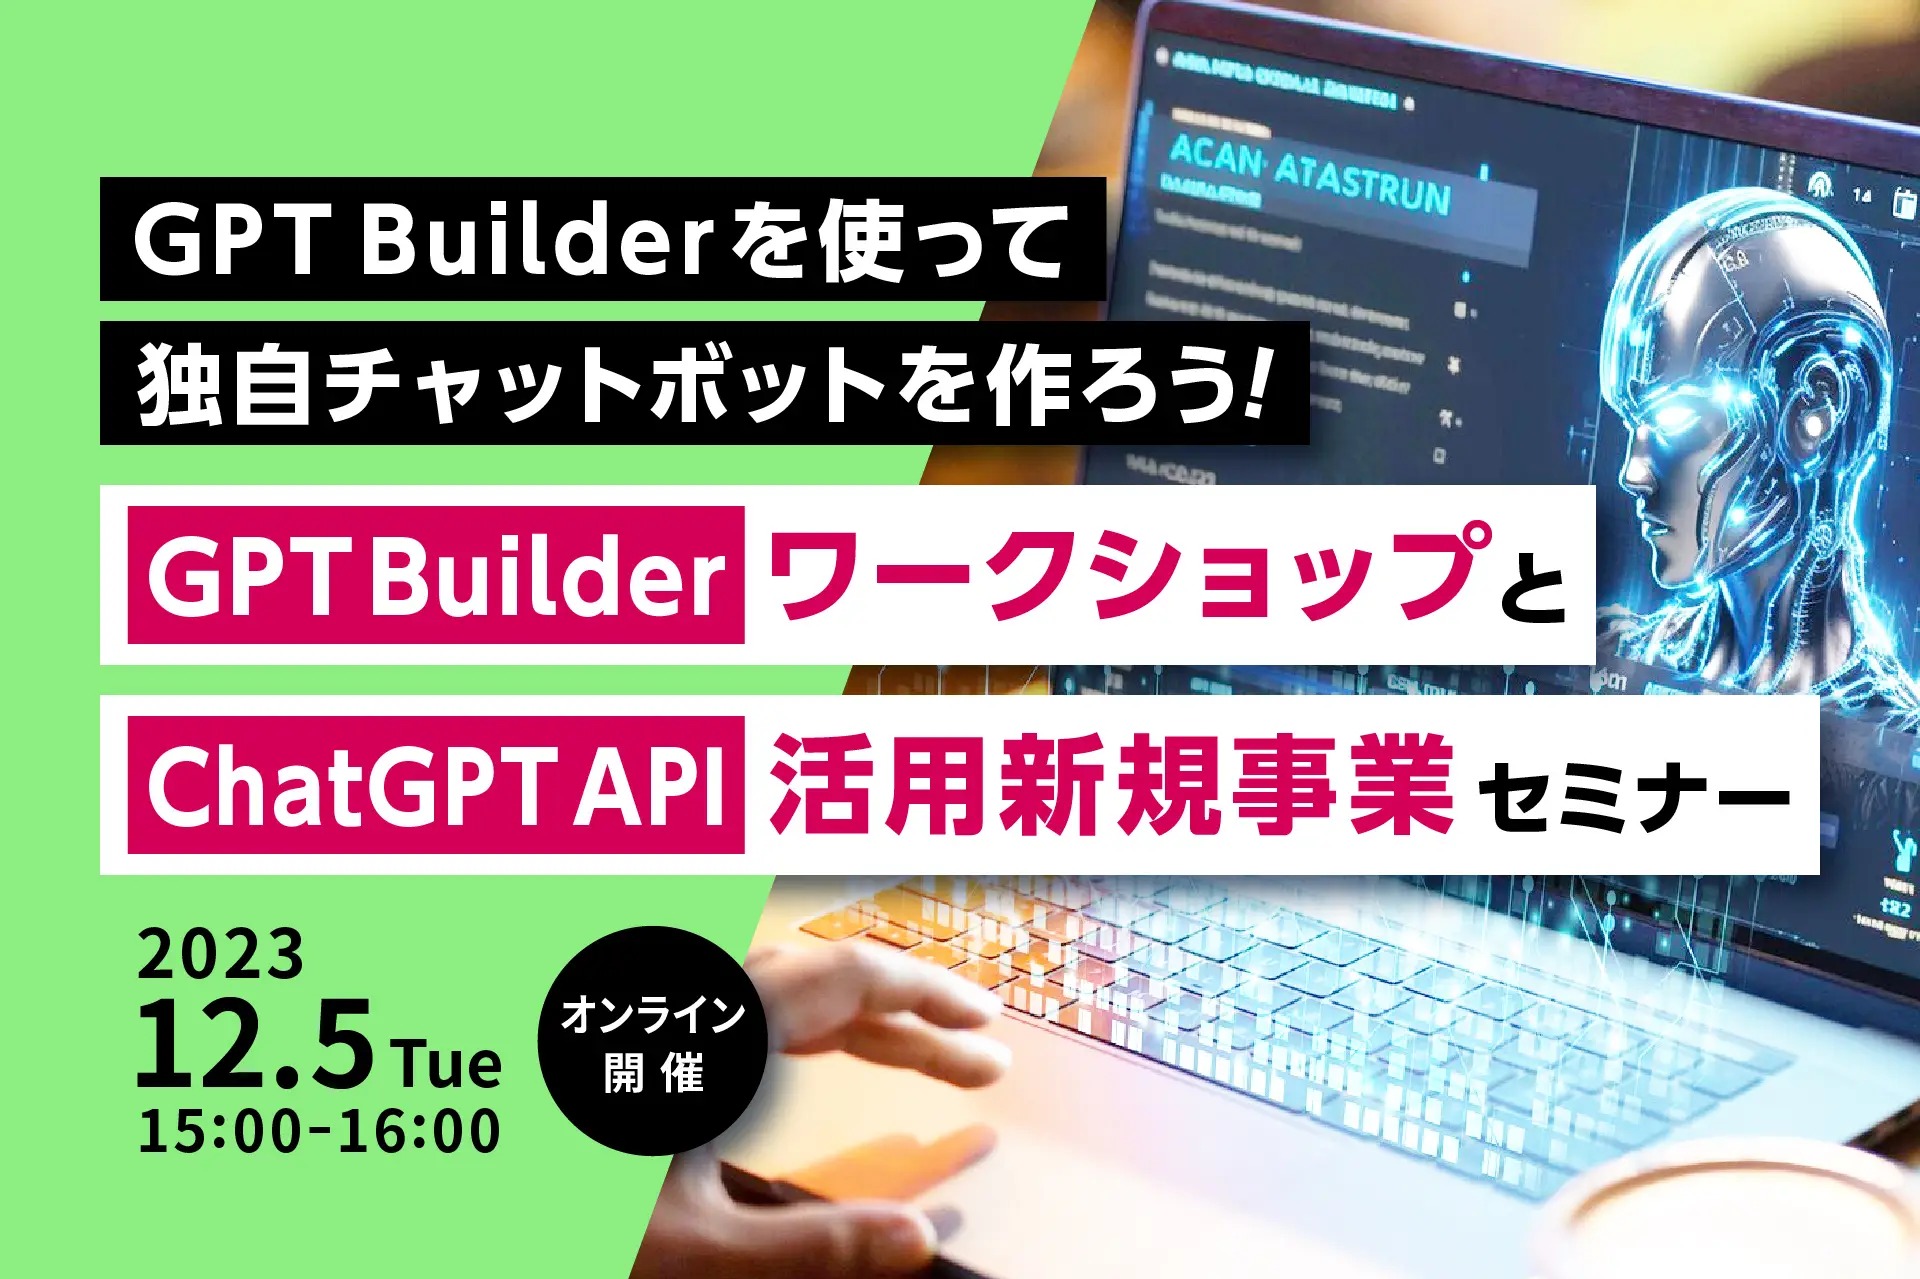 GPT Builderを使って独自チャットボットを作ろう！GPT BuilderワークショップとChatGPT API活用新規事業セミナー